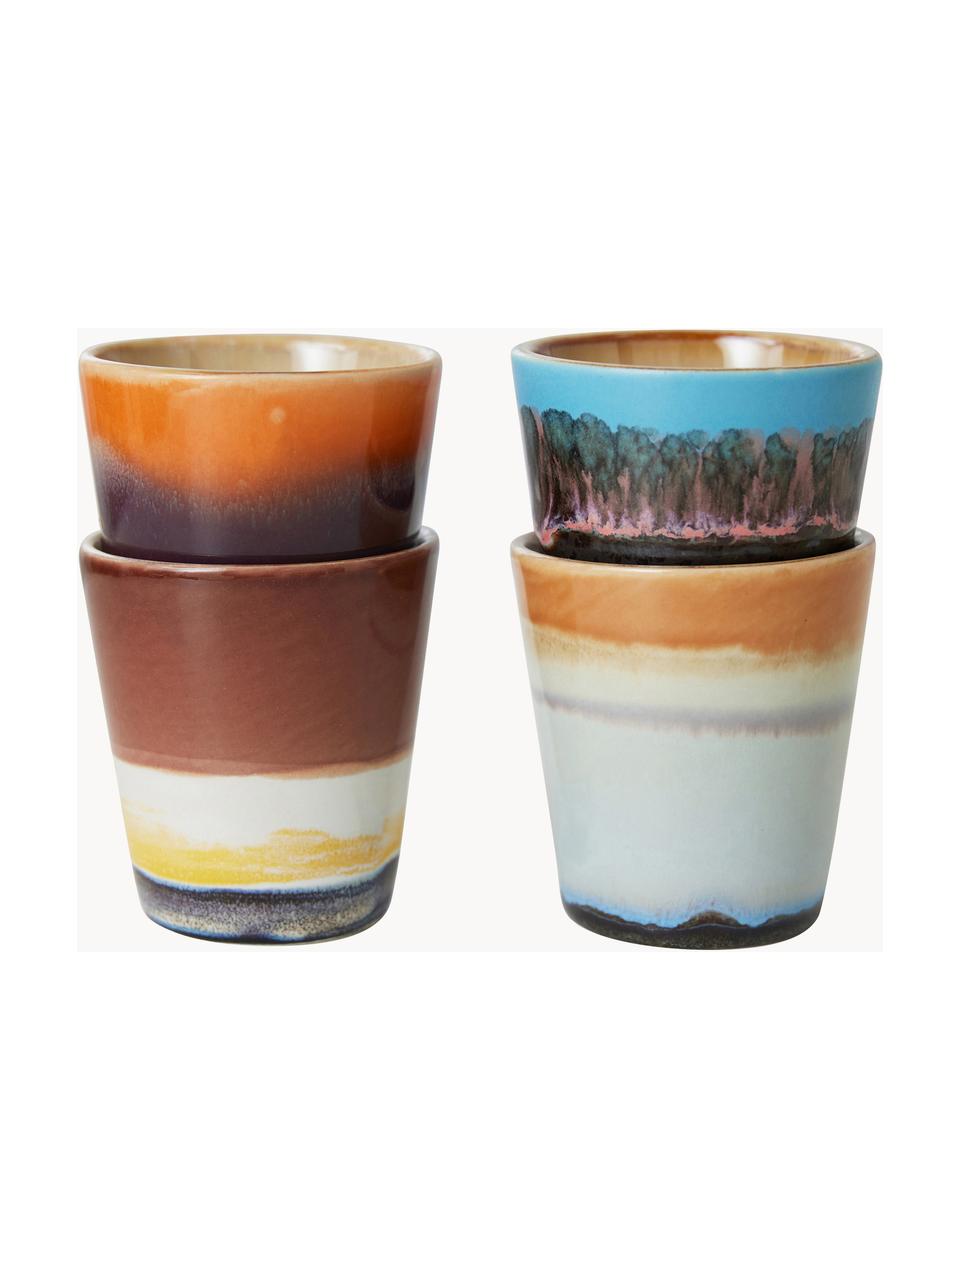 Handbemalte Keramik-Espressobecher 70's mit reaktiver Glasur, 4er-Set, Keramik, Bunt, Ø 6 x H 6 cm, 80 ml